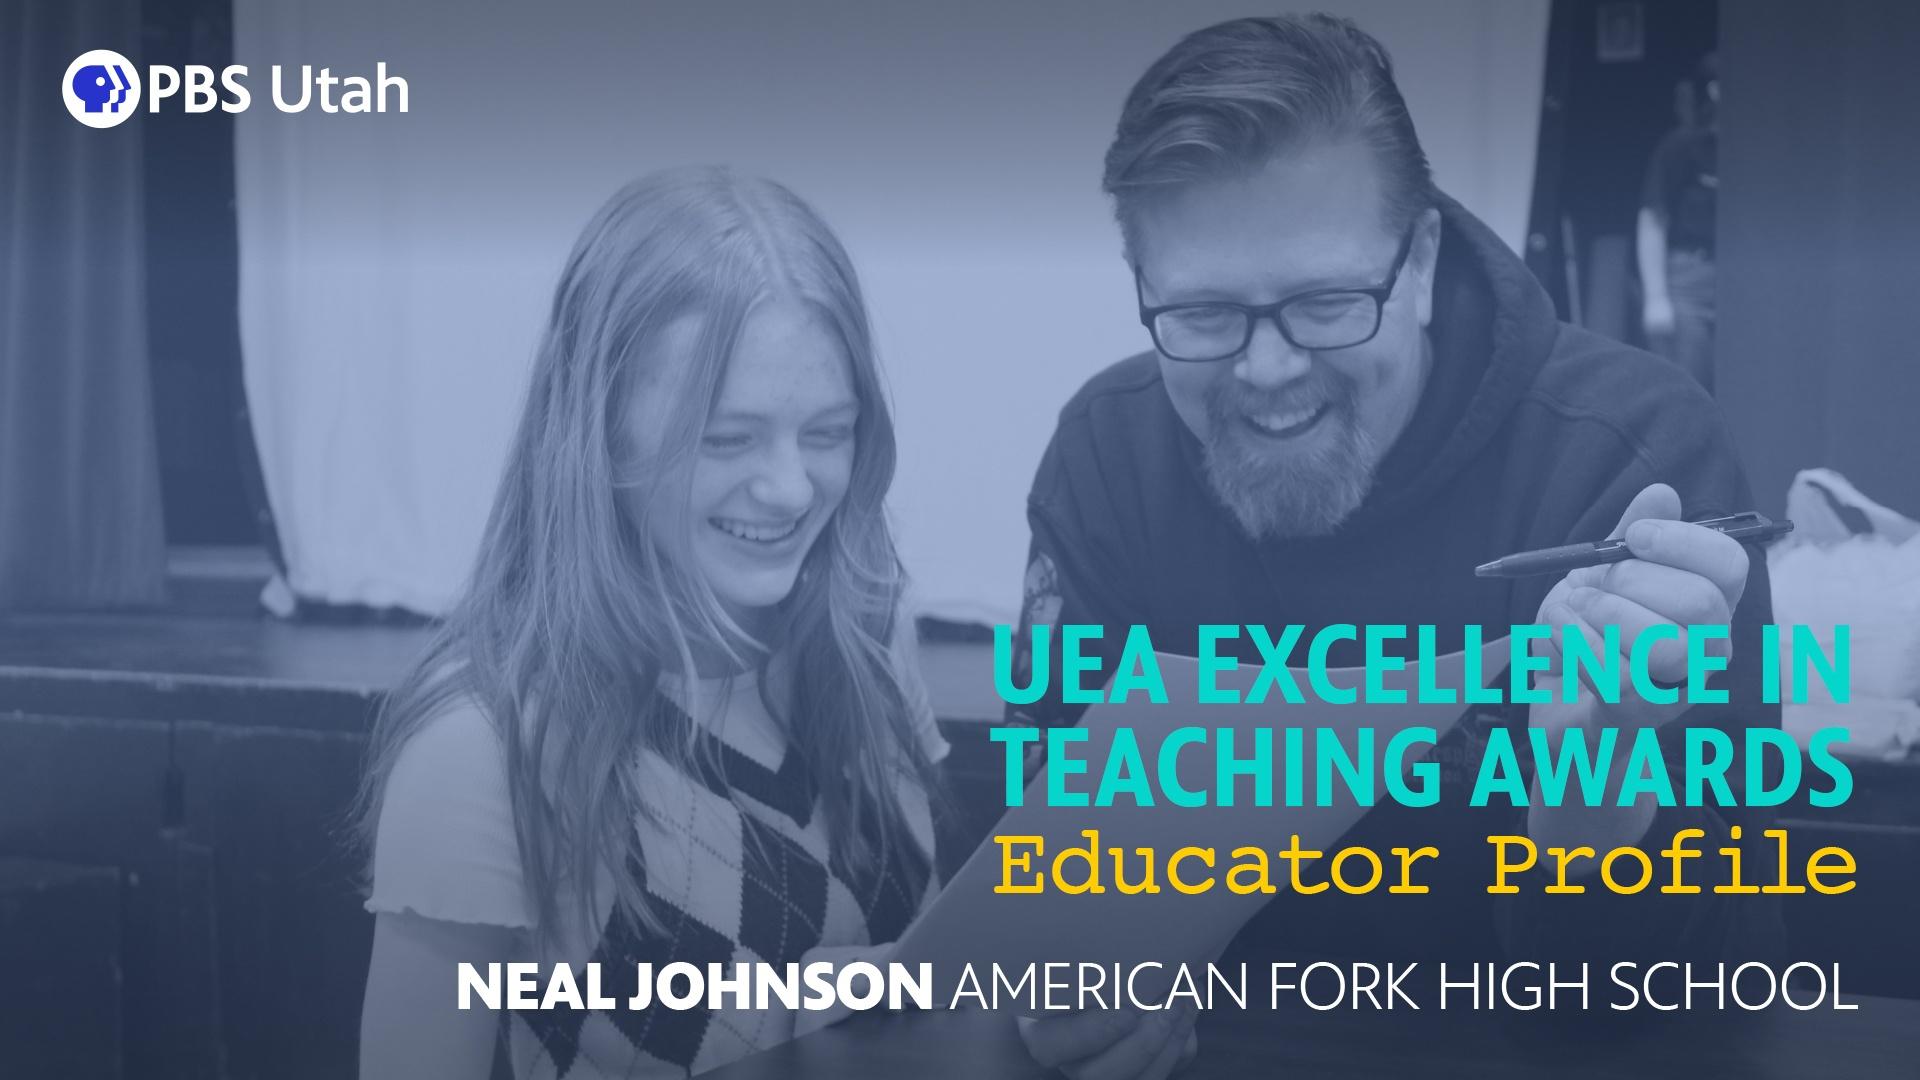 Neal Johnson, American Fork High School